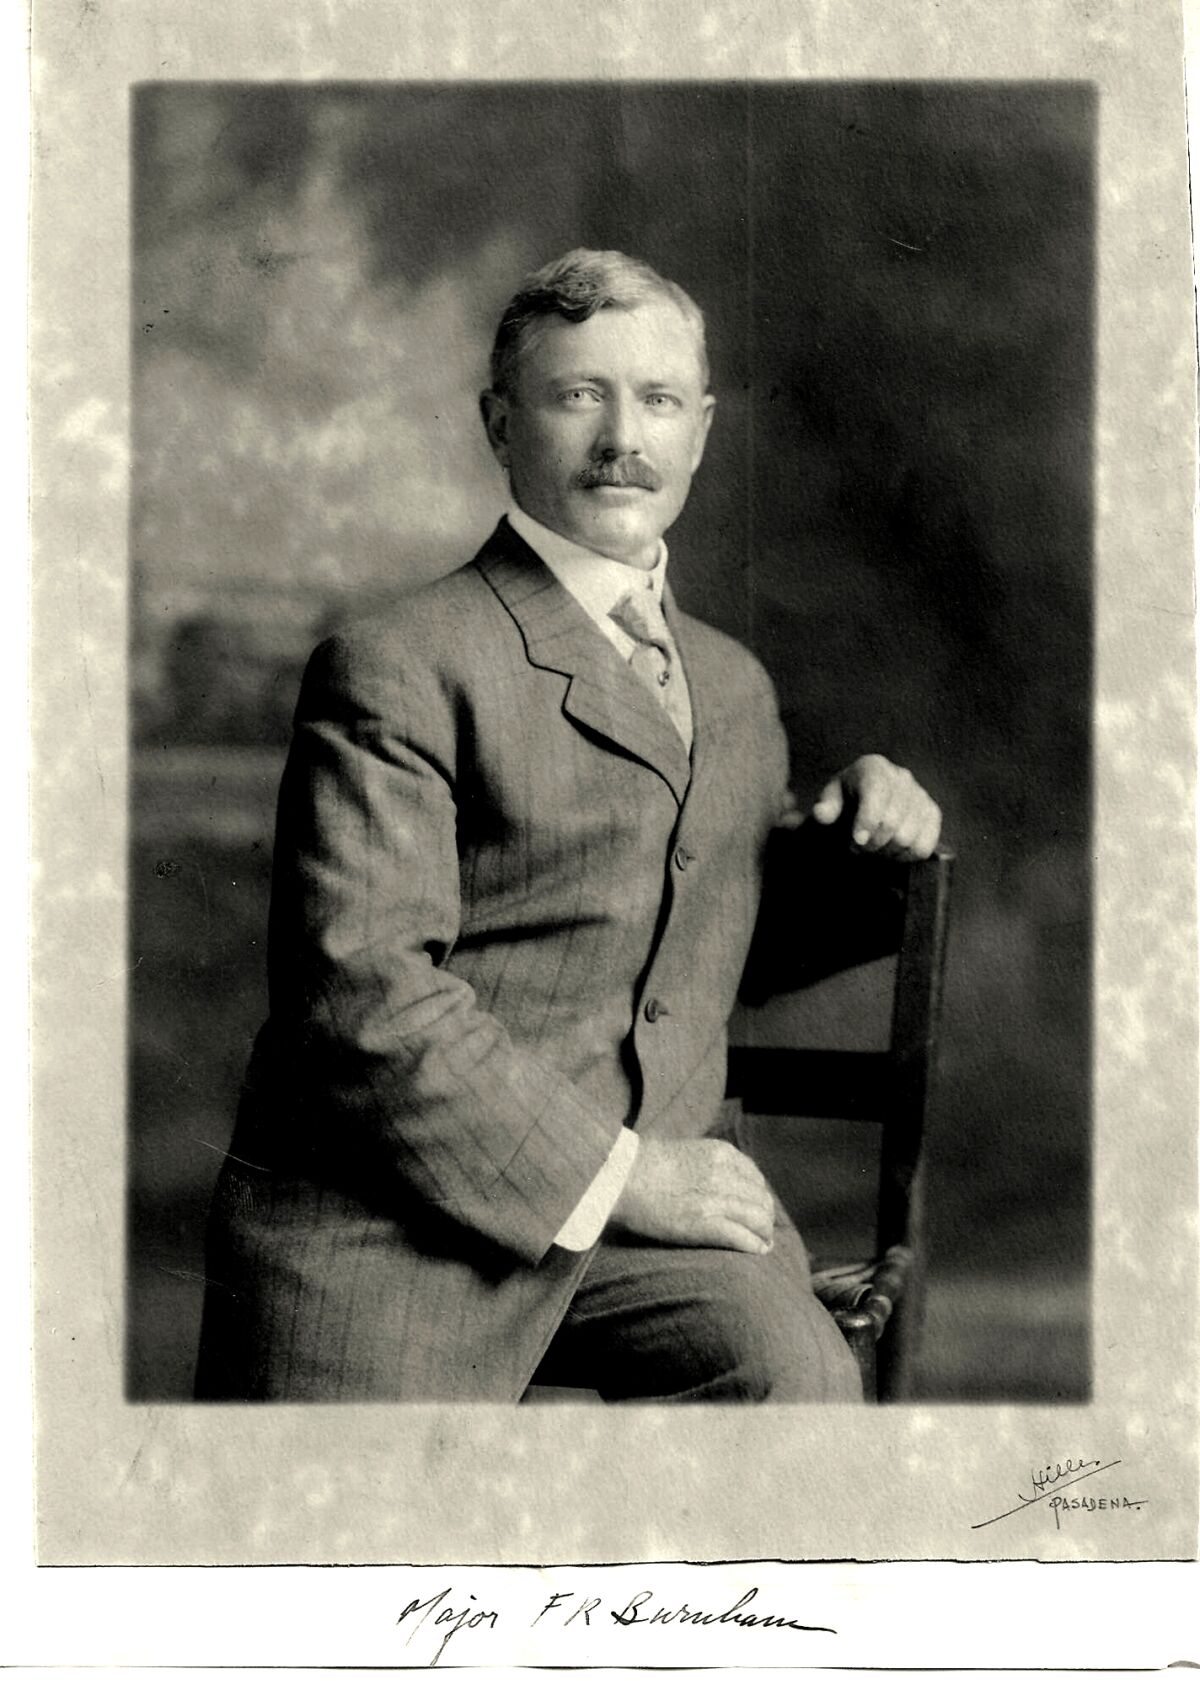 Frederick Russell Burnham in Pasadena circa 1910.